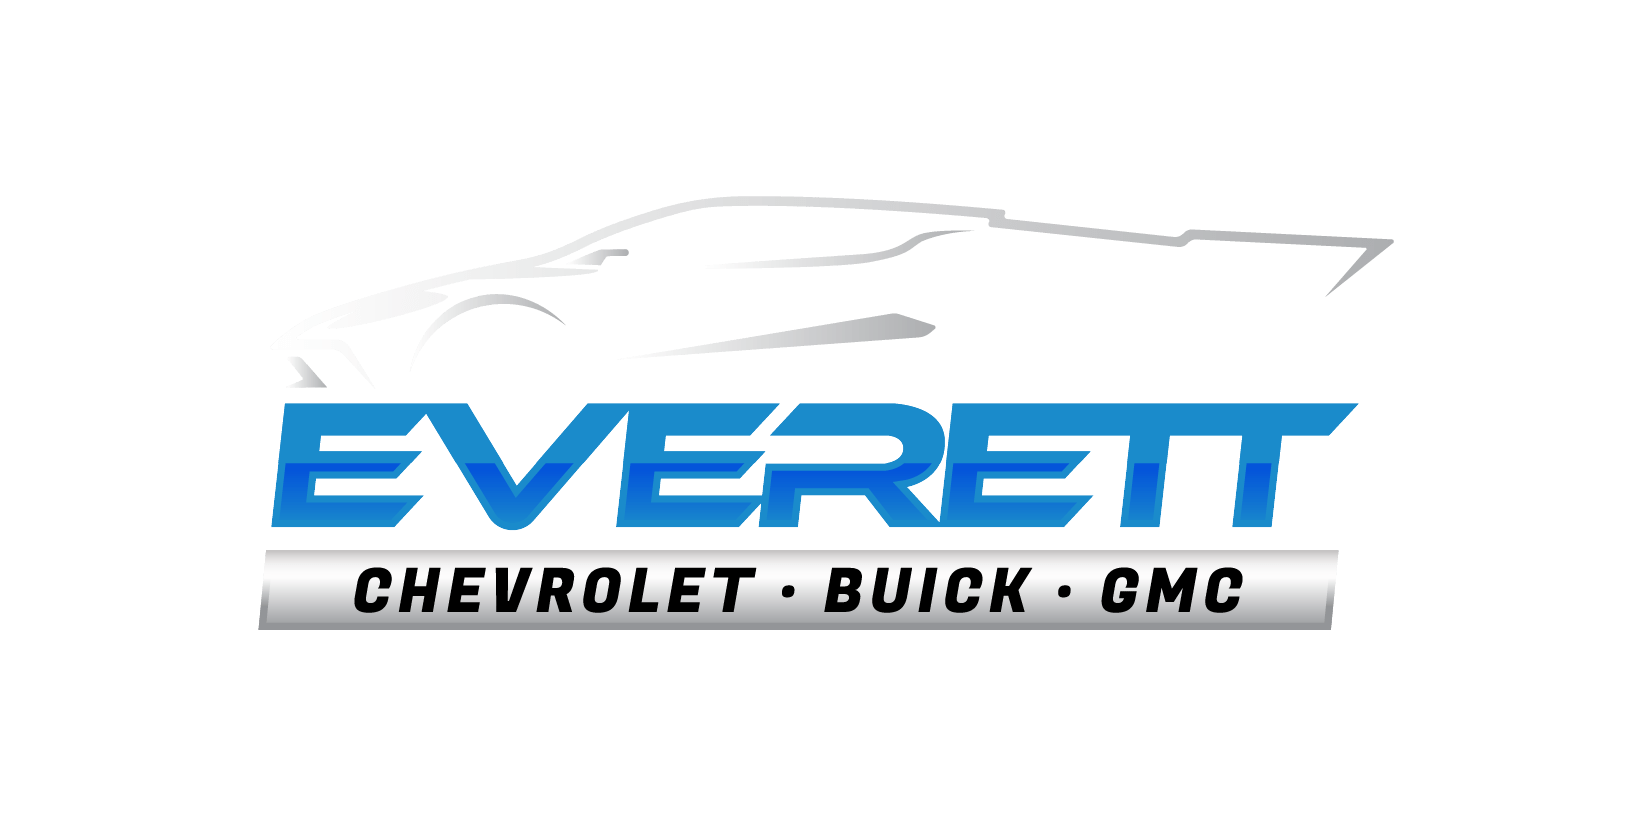 Everett Chevrolet Buick GMC logo